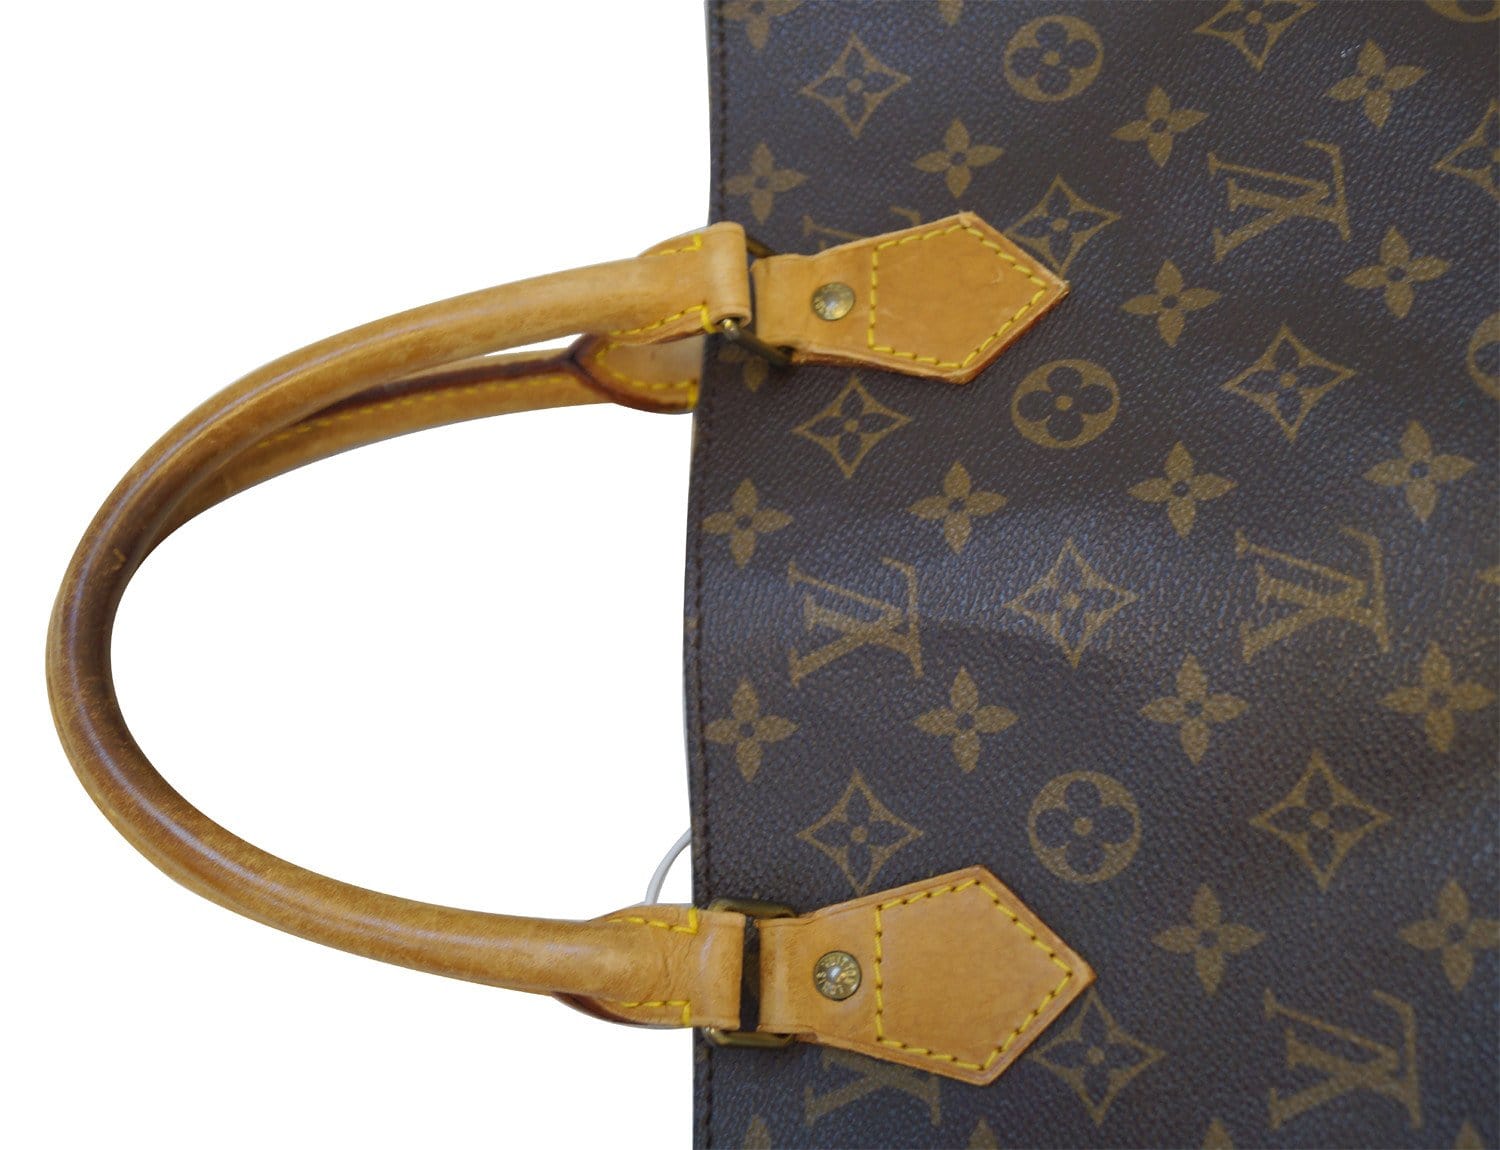 Louis Vuitton, Bags, Louis Vuitton Lv Sac Plat Monogram Book Tote Bag